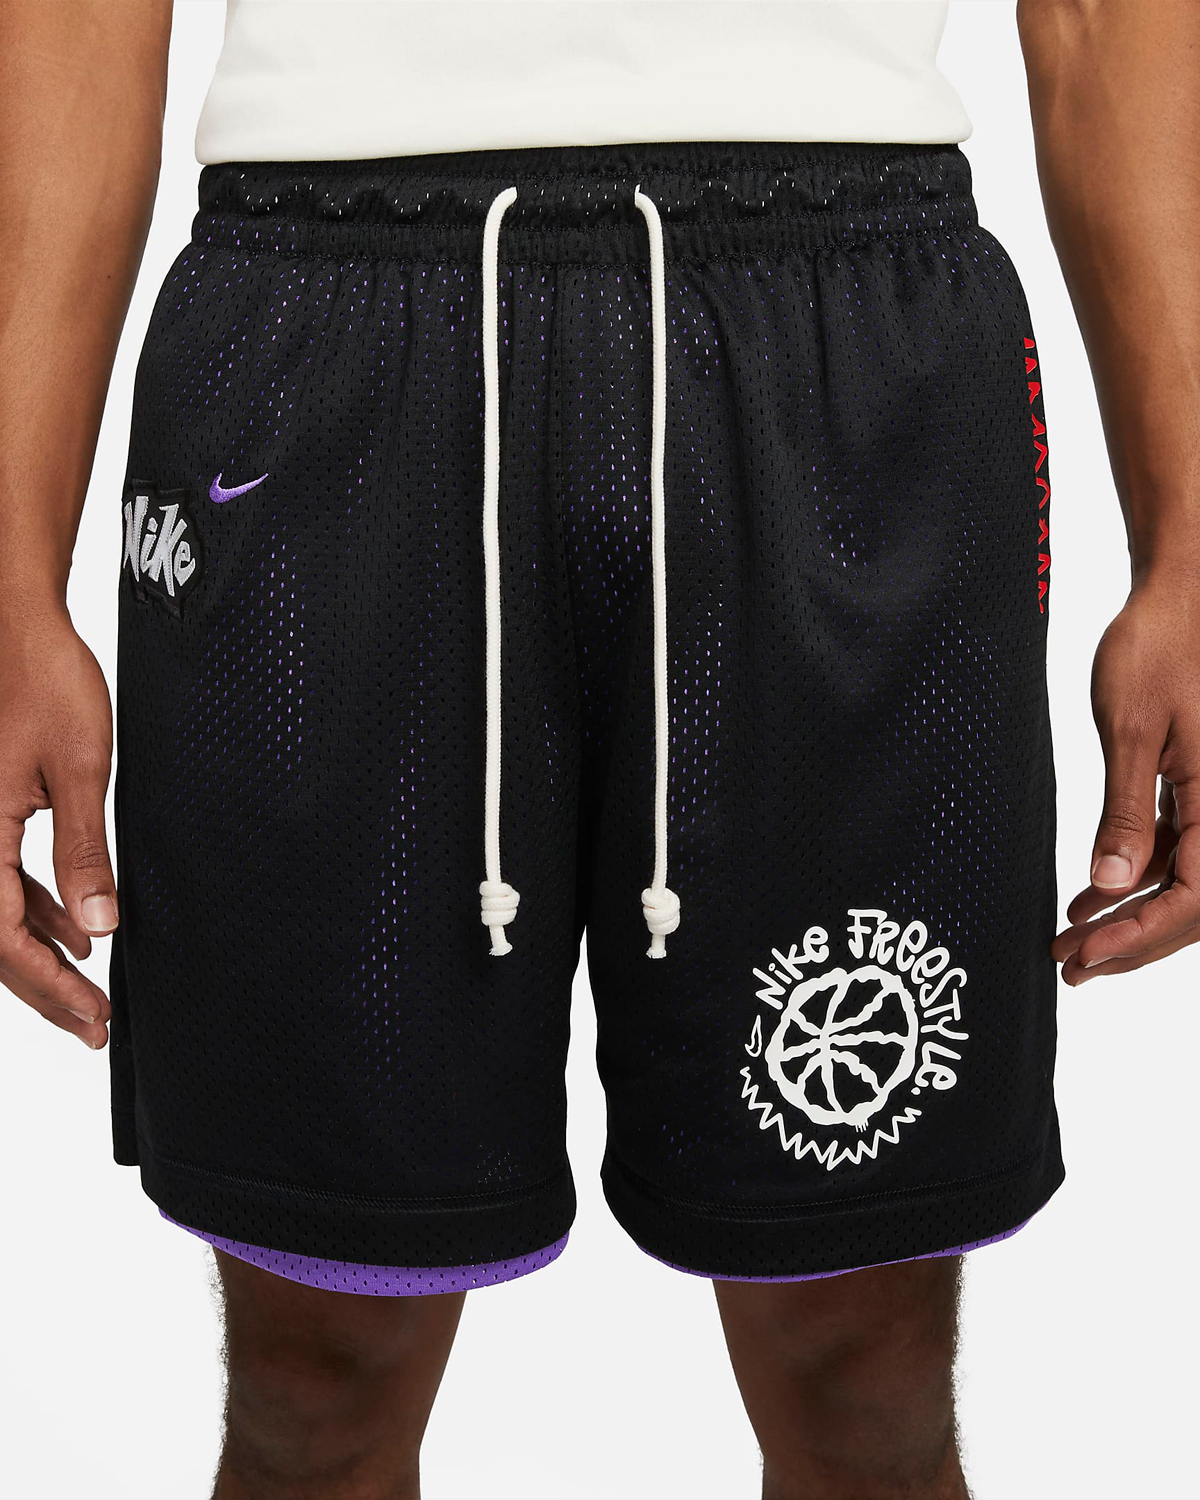 Nike-Standard-Issue-Reversible-Basketball-Shorts-Court-Purple-Black-2